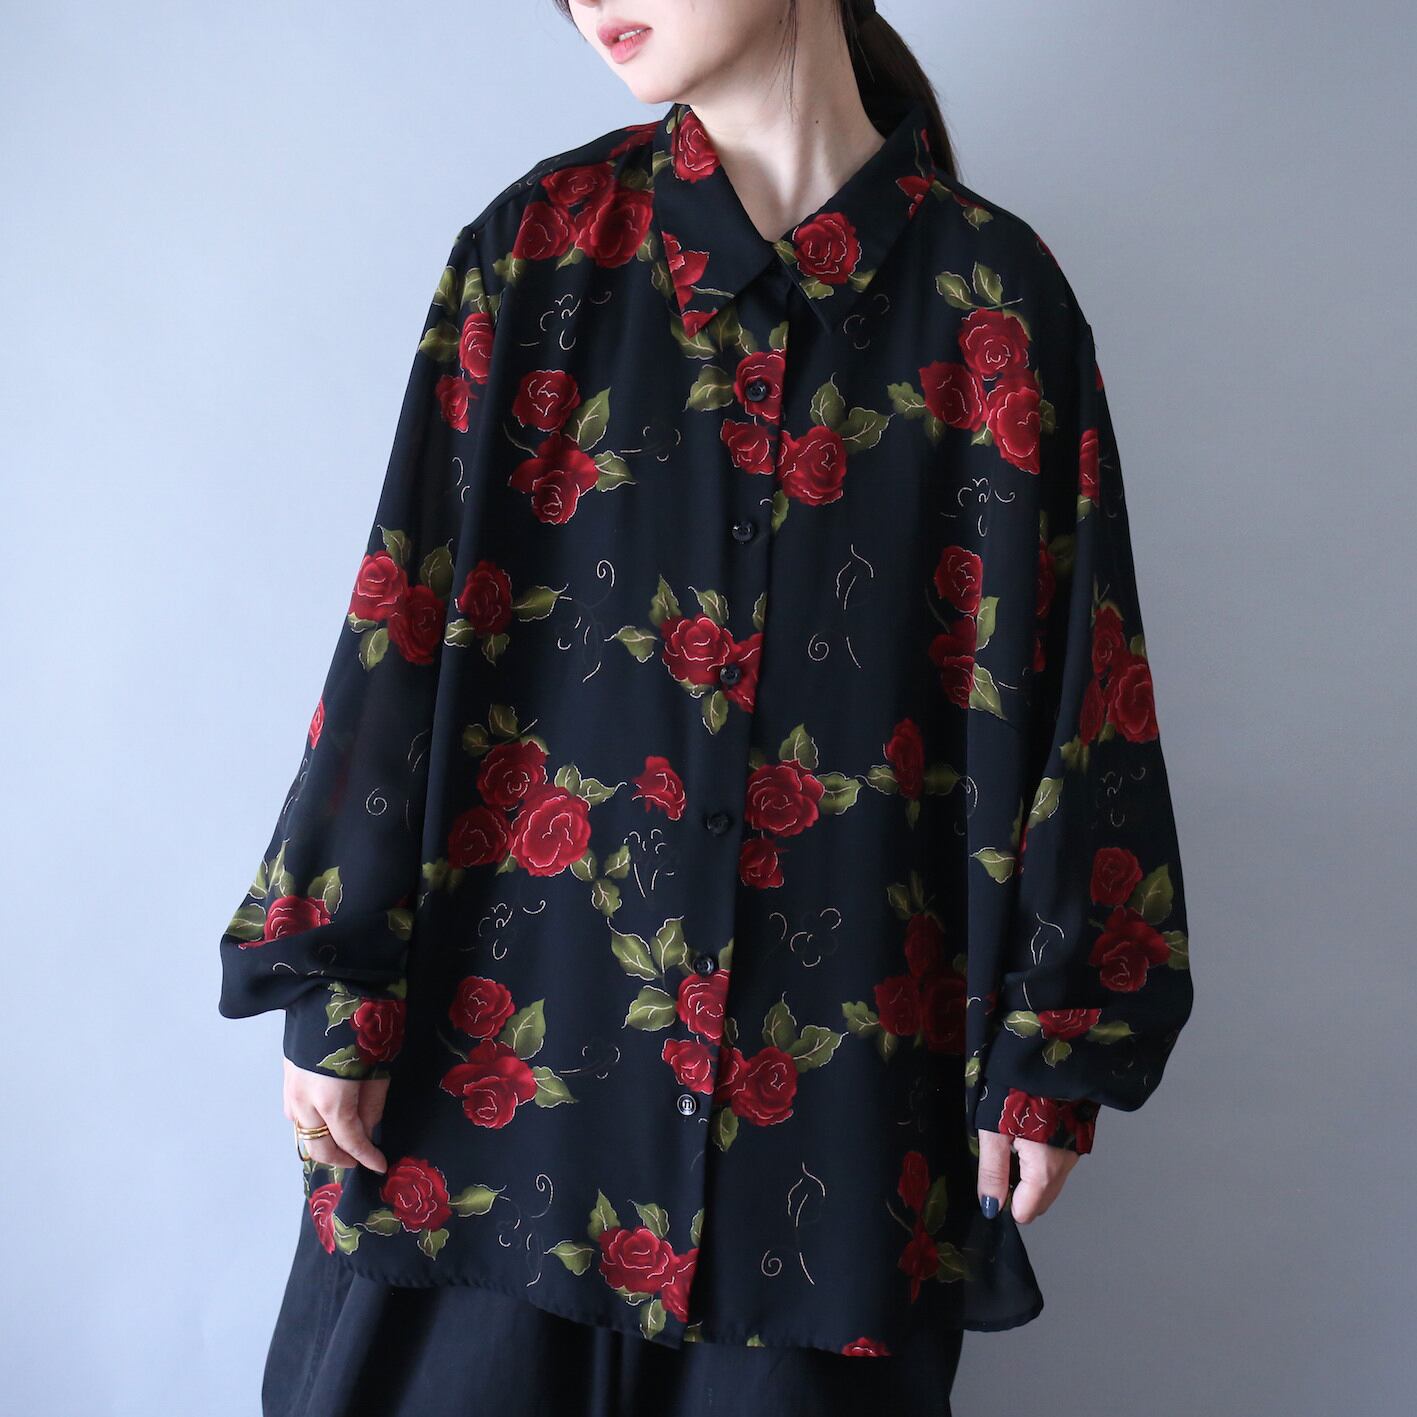 black base beautiful flower art pattern over silhouette see-through shirt